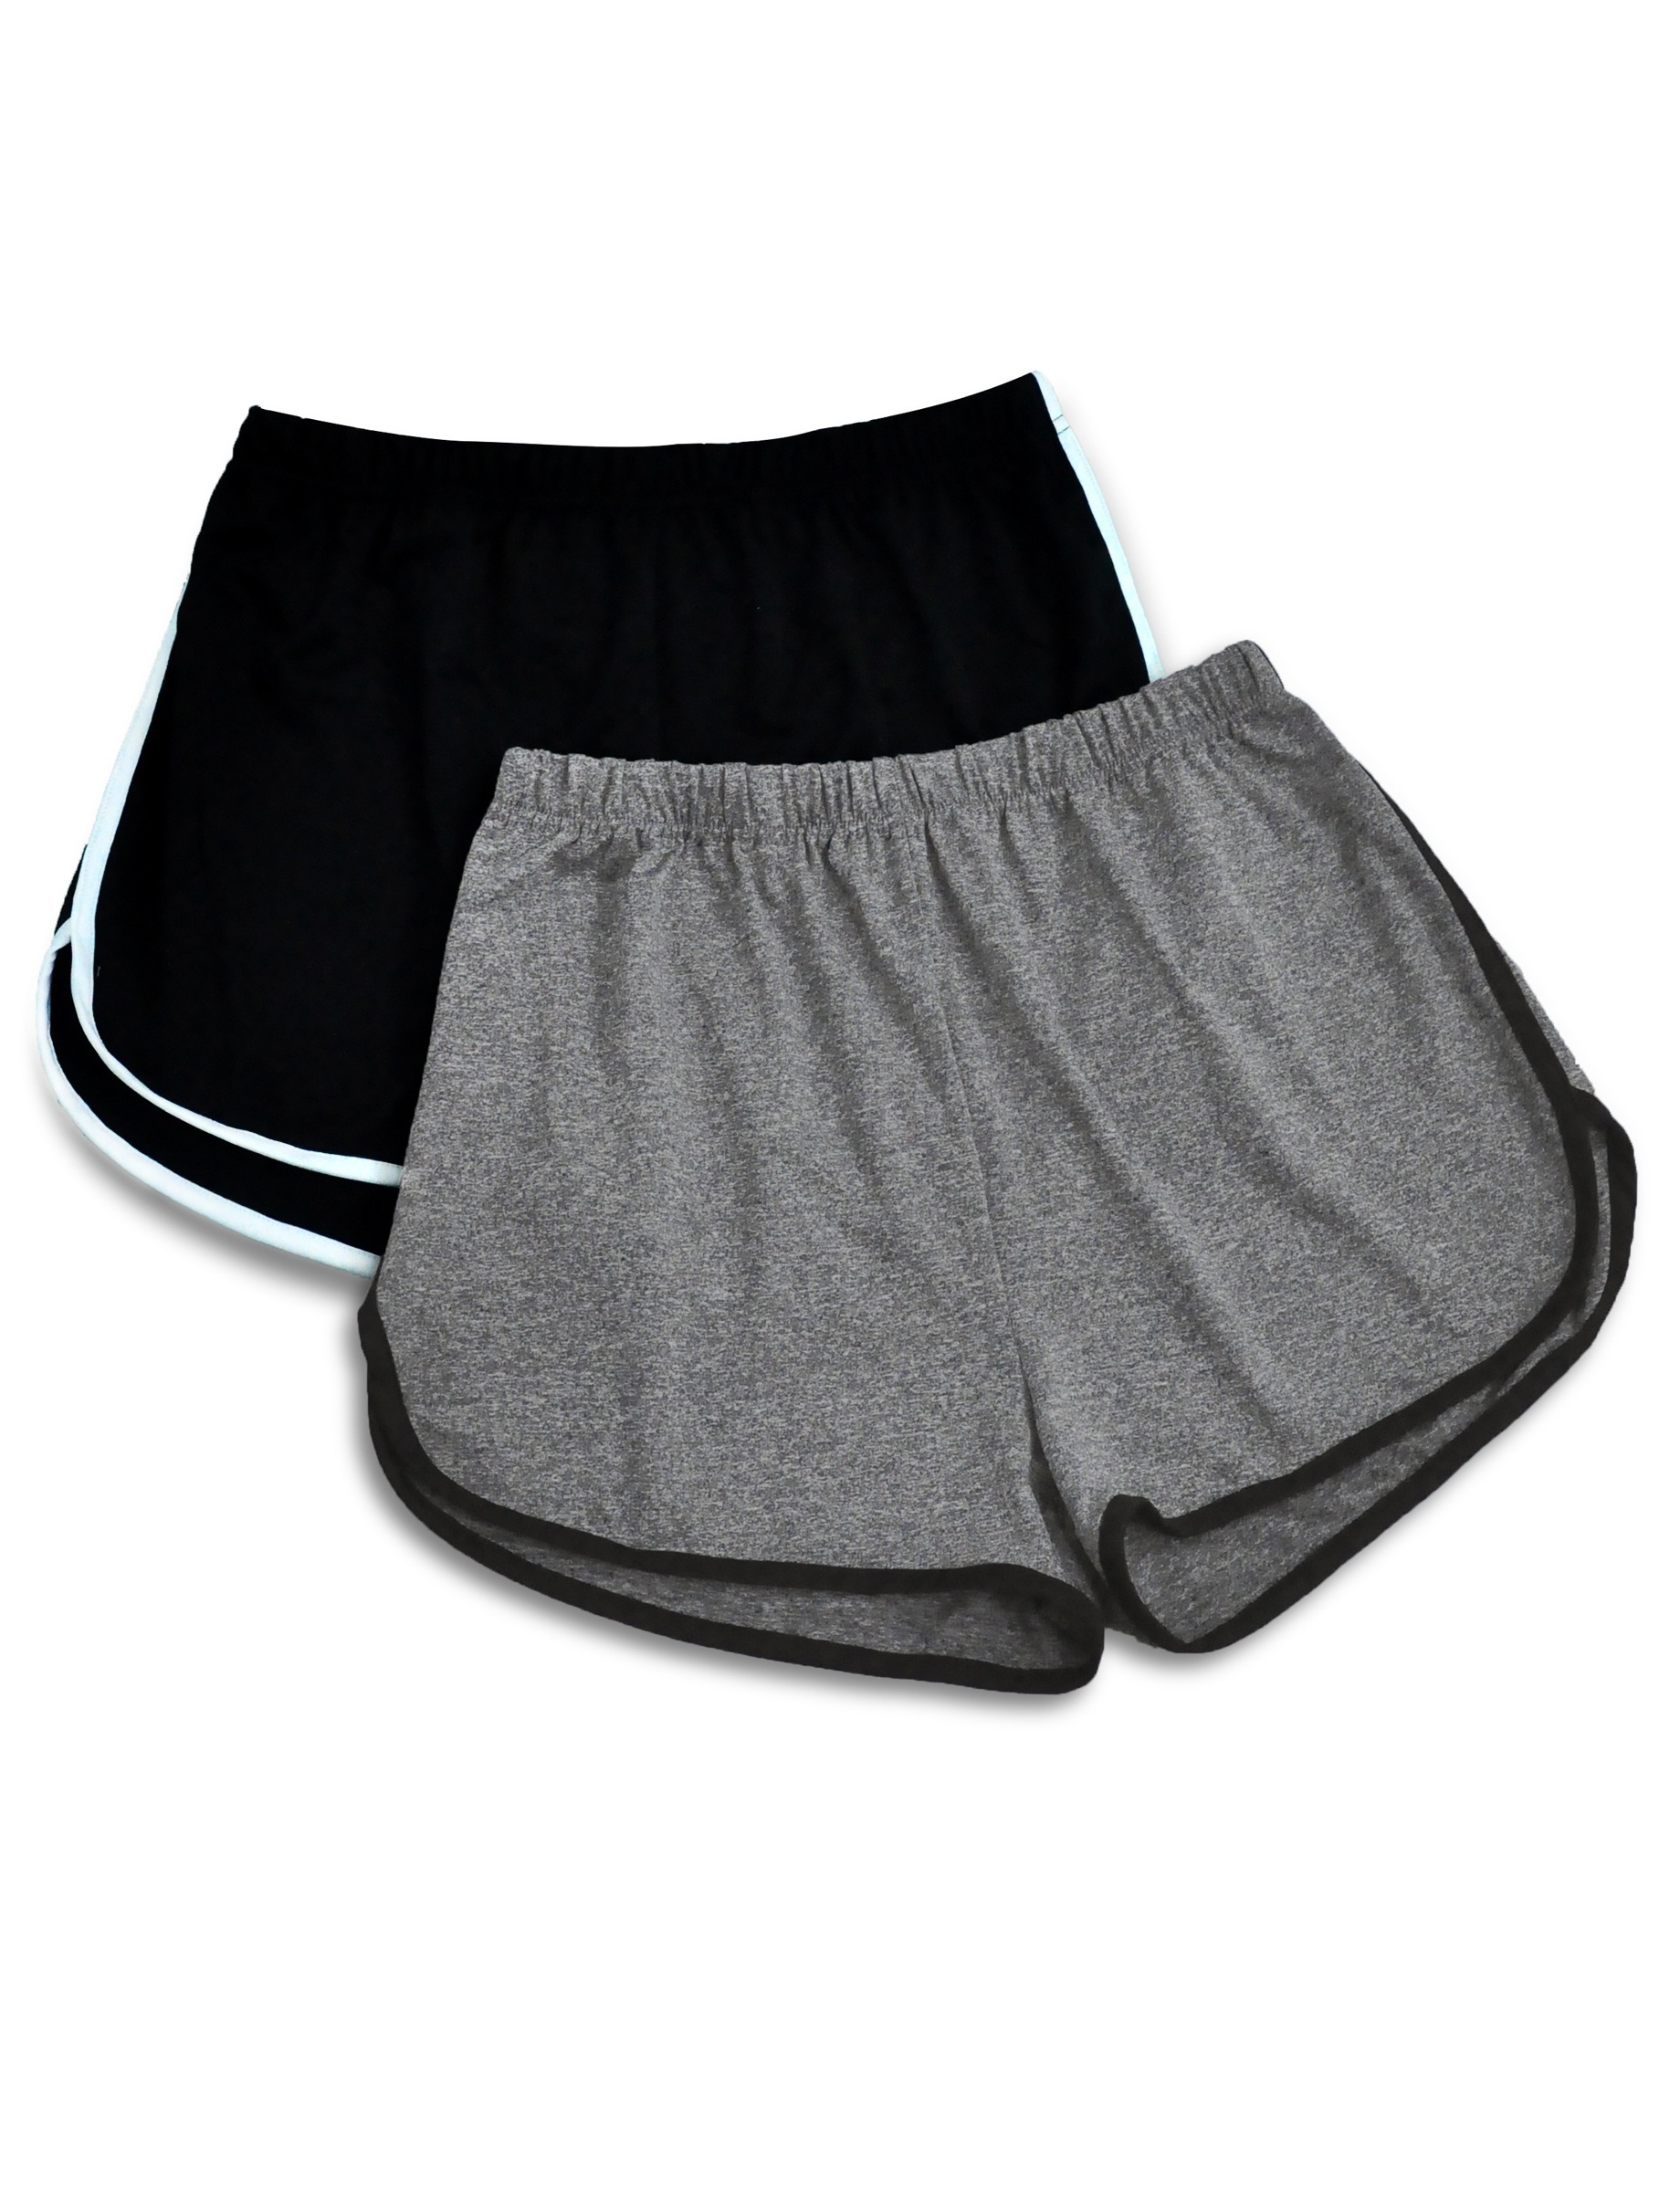 Cotton Sports Shorts Athletic Shorts Yoga Dance Summer Short Pants For Women